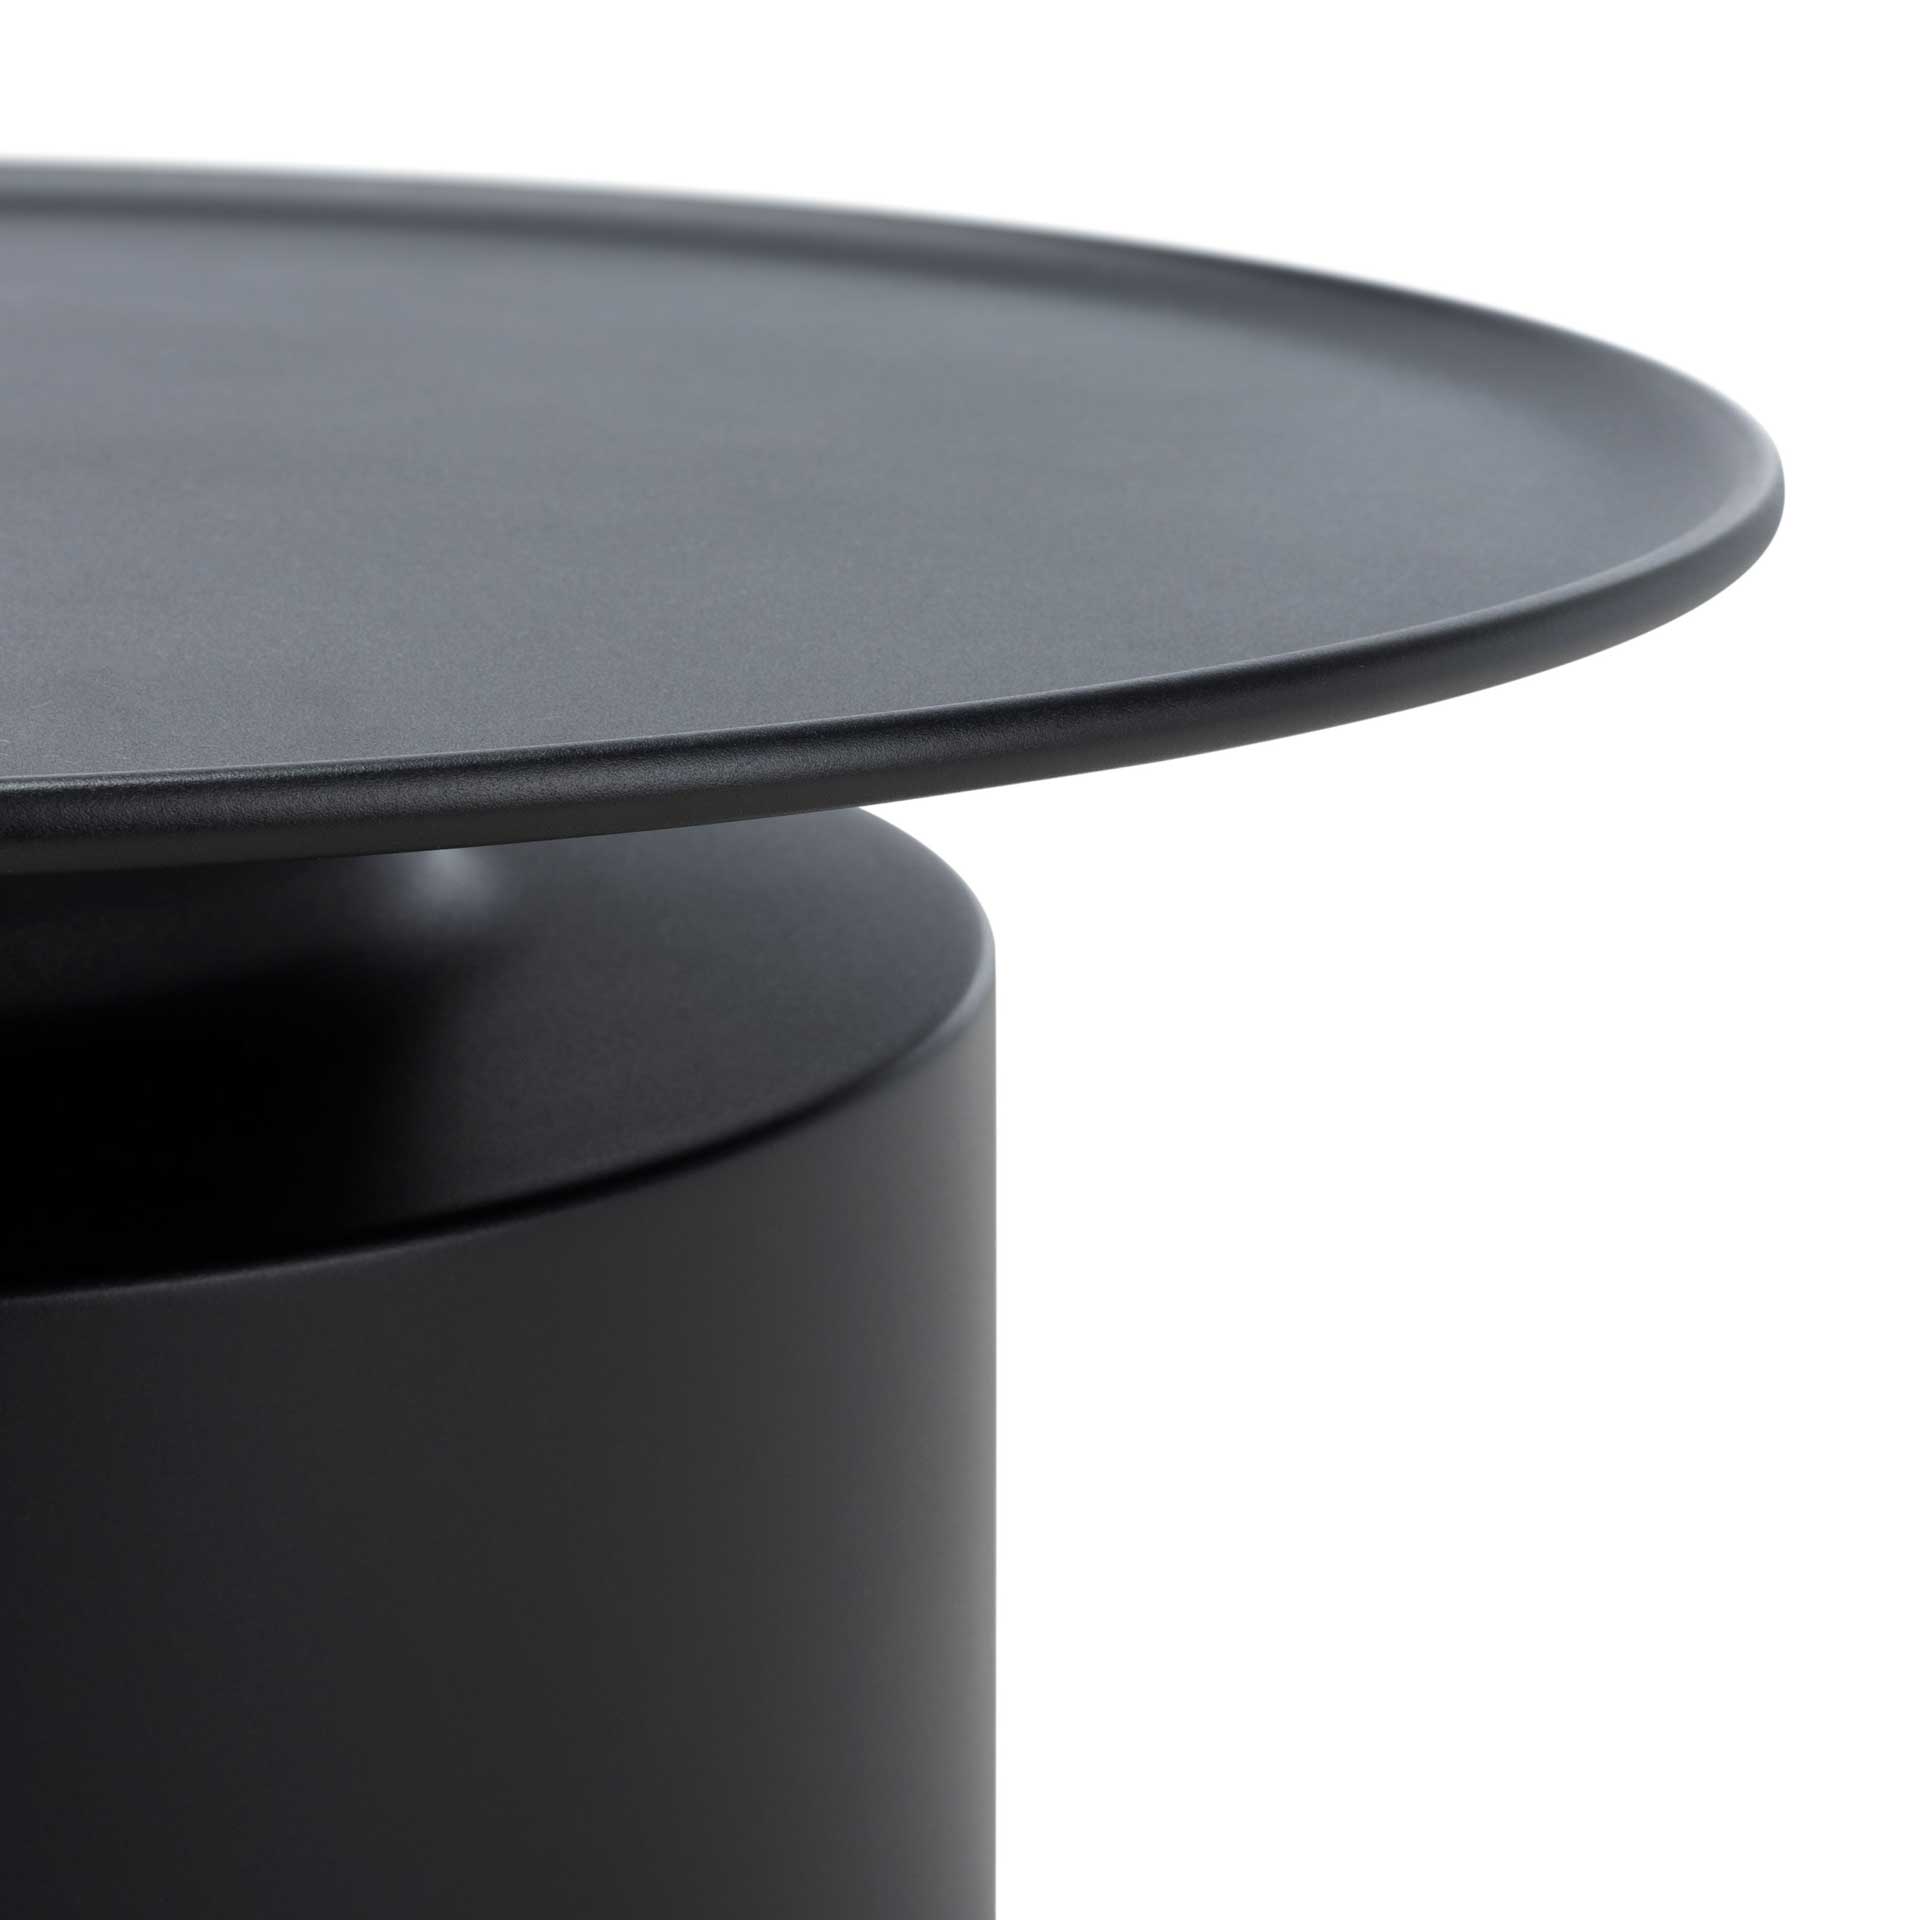 Danna Round Metal Coffee Table Black